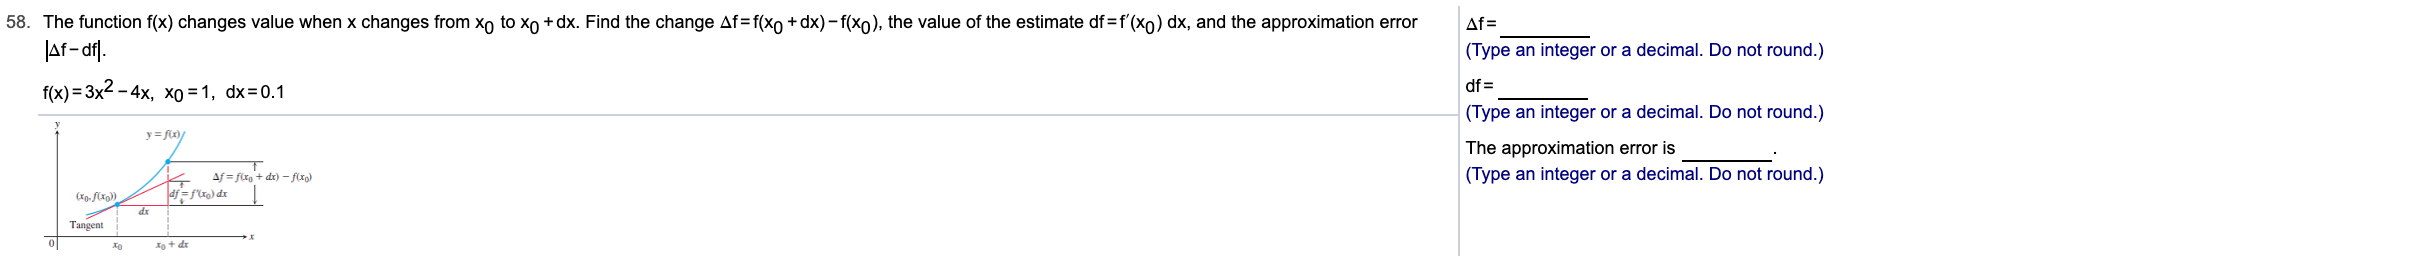 58. The function f(x) changes value when x changes from xo to xo + dx. Find the change Af=f(xo +dx) - f(xo), the value of the estimate df=f'(xo) dx, and the approximation error
JAf- af).
f(x) = 3x2
Af =
(Type an integer or a decimal. Do not round.)
df =
(Type an integer or a decimal. Do not round.)
The approximation error is
(Type an integer or a decimal. Do not round.)
- 4x, xo = 1, dx=0.1
Af = fixg + dx) – flxg)
af =f'lr) dr
dr
Tangent
Io + dr
